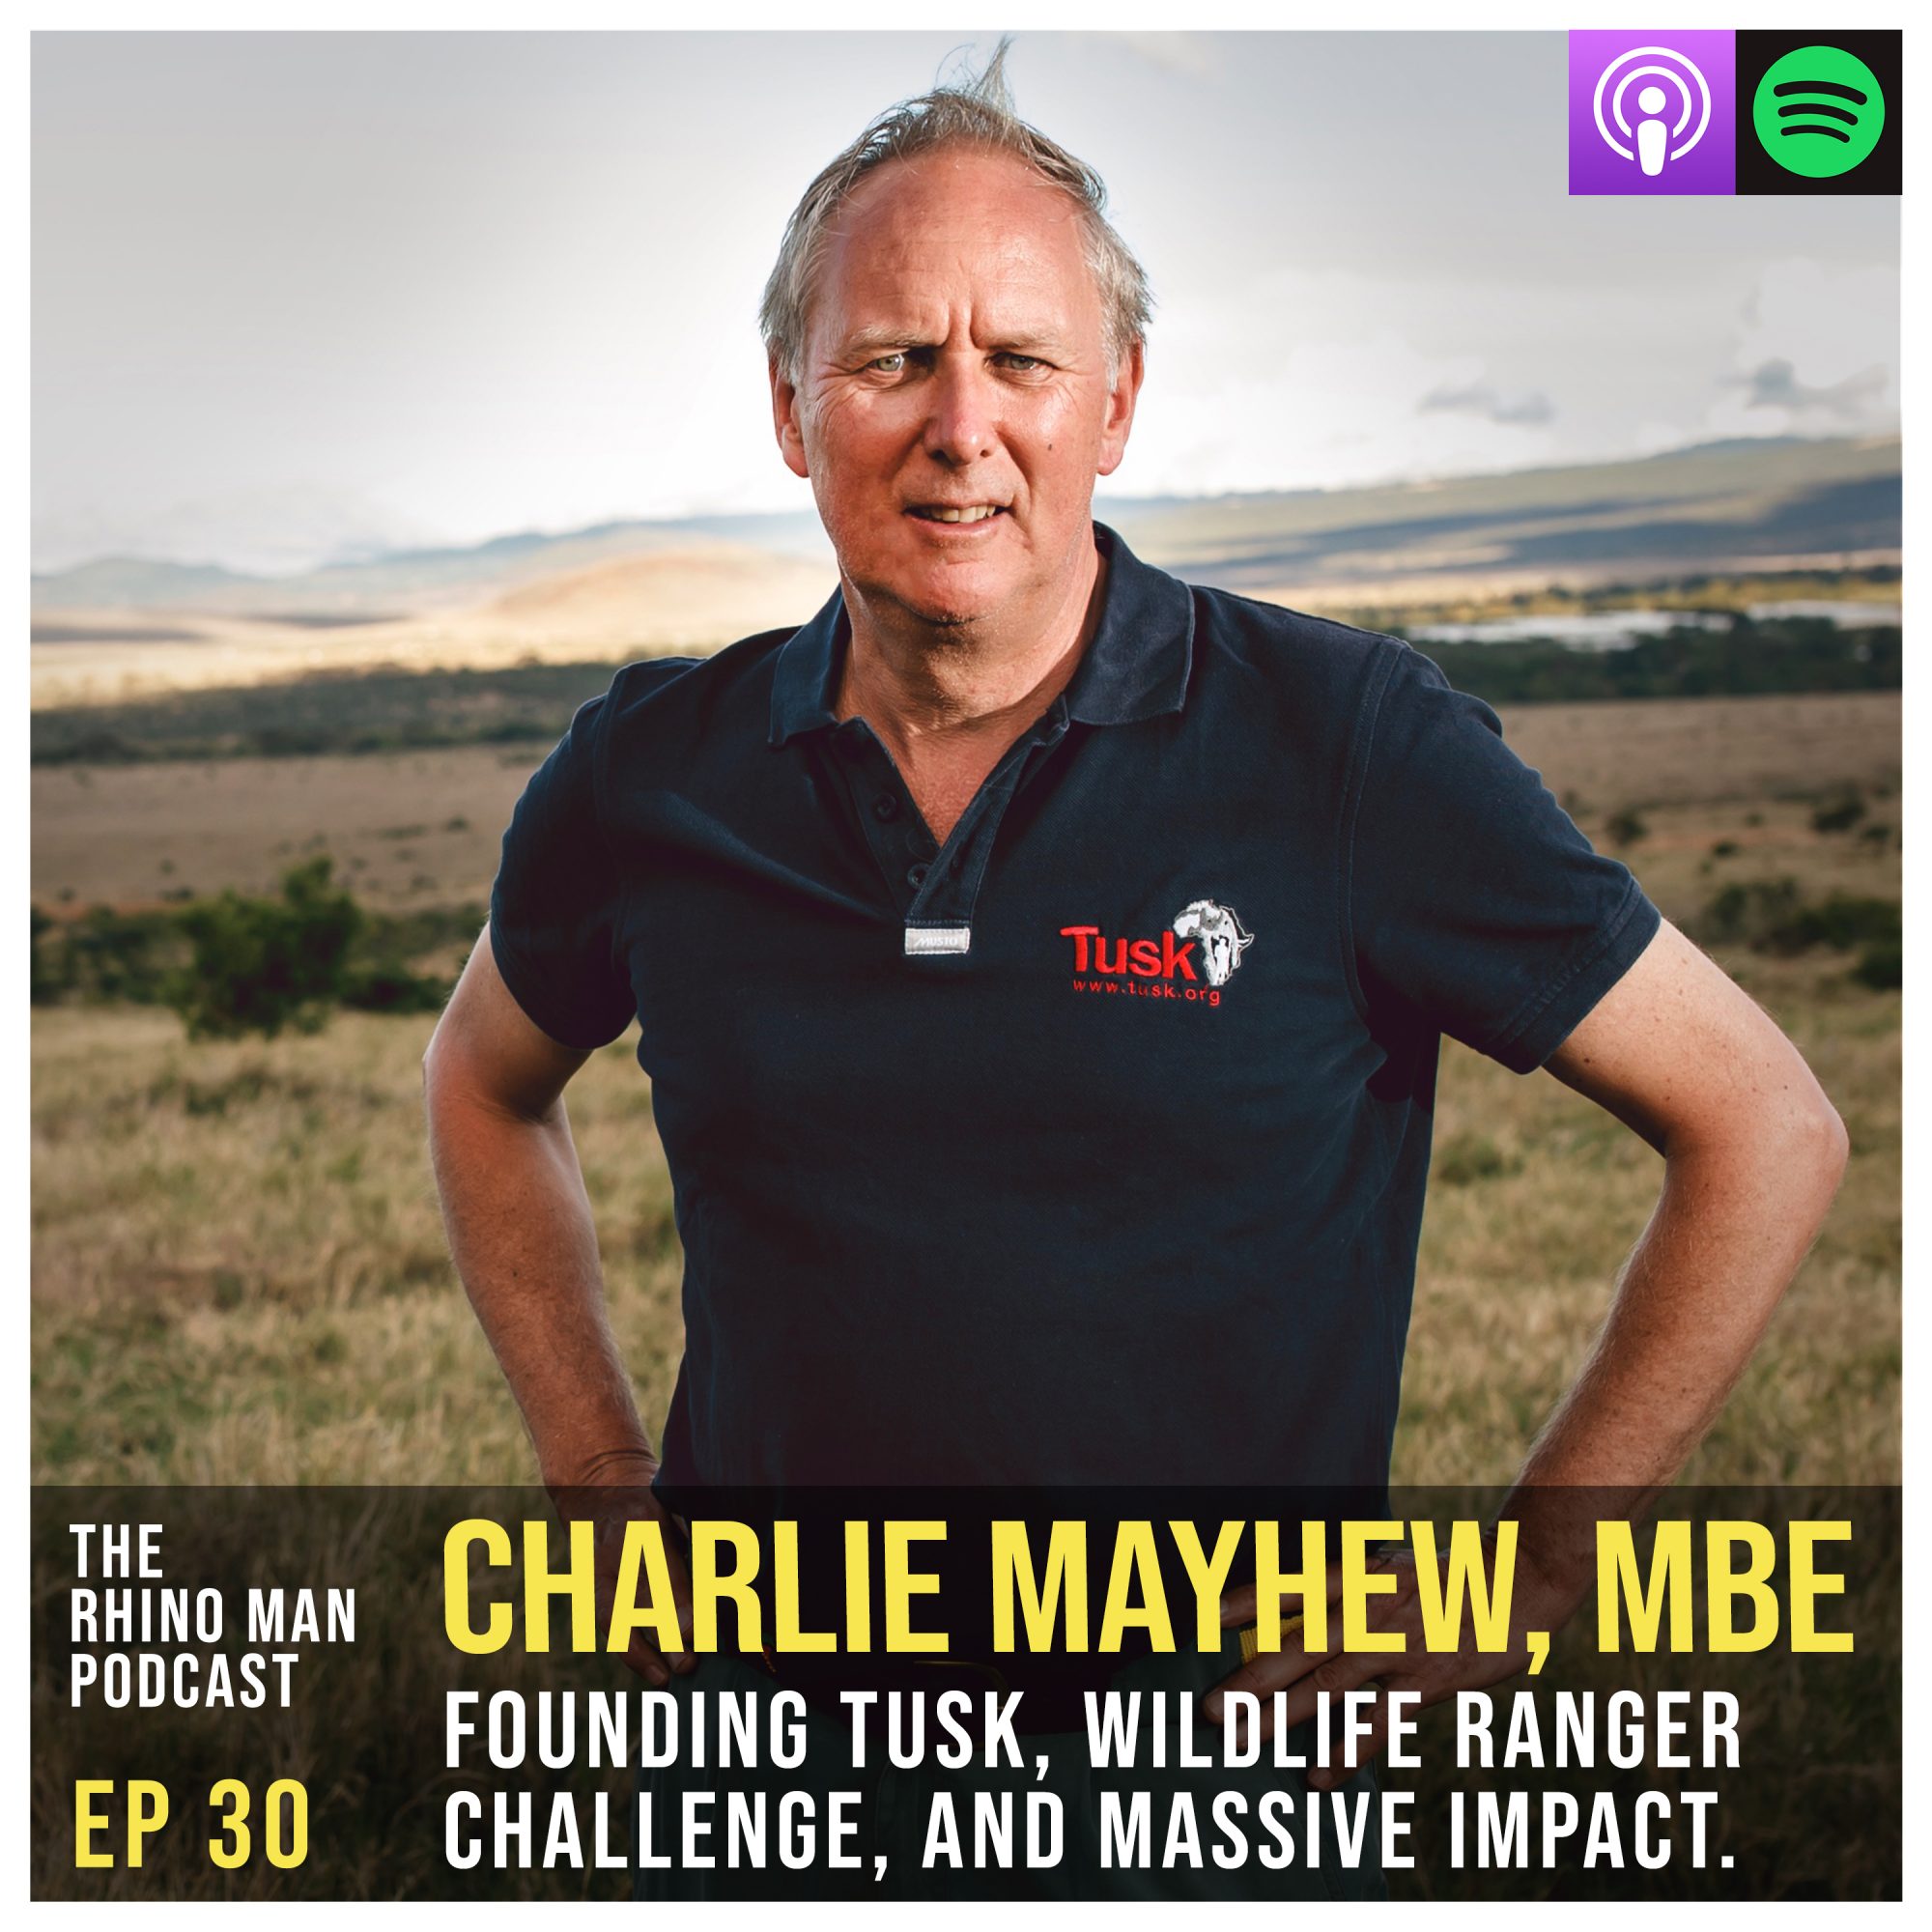 Ep 30: Charlie Mayhew, MBE – Founding Tusk, Wildlife Ranger Challenge, and Massive Impact.